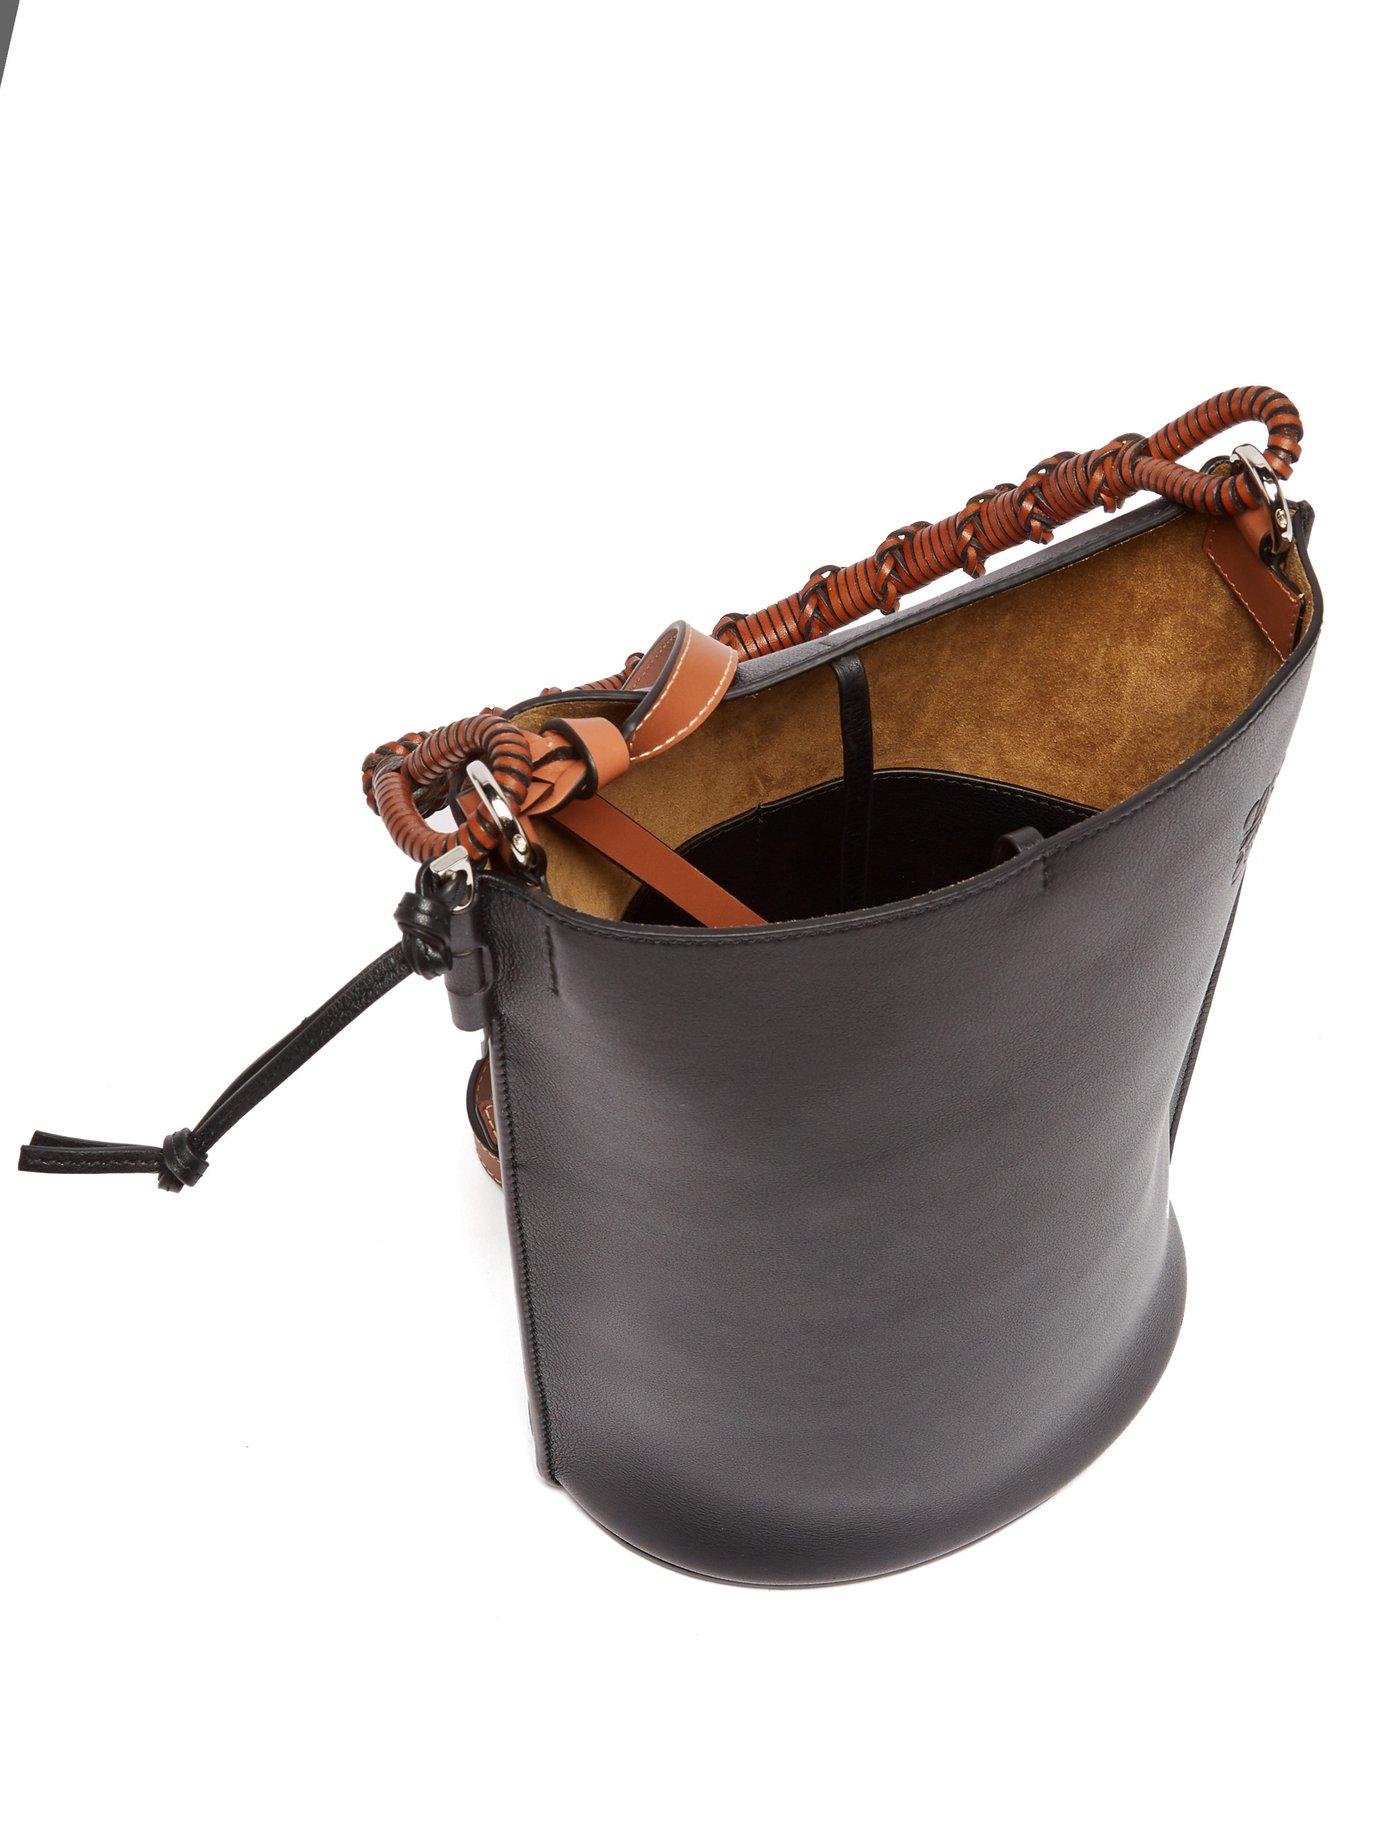 loewe gate bucket handle bag